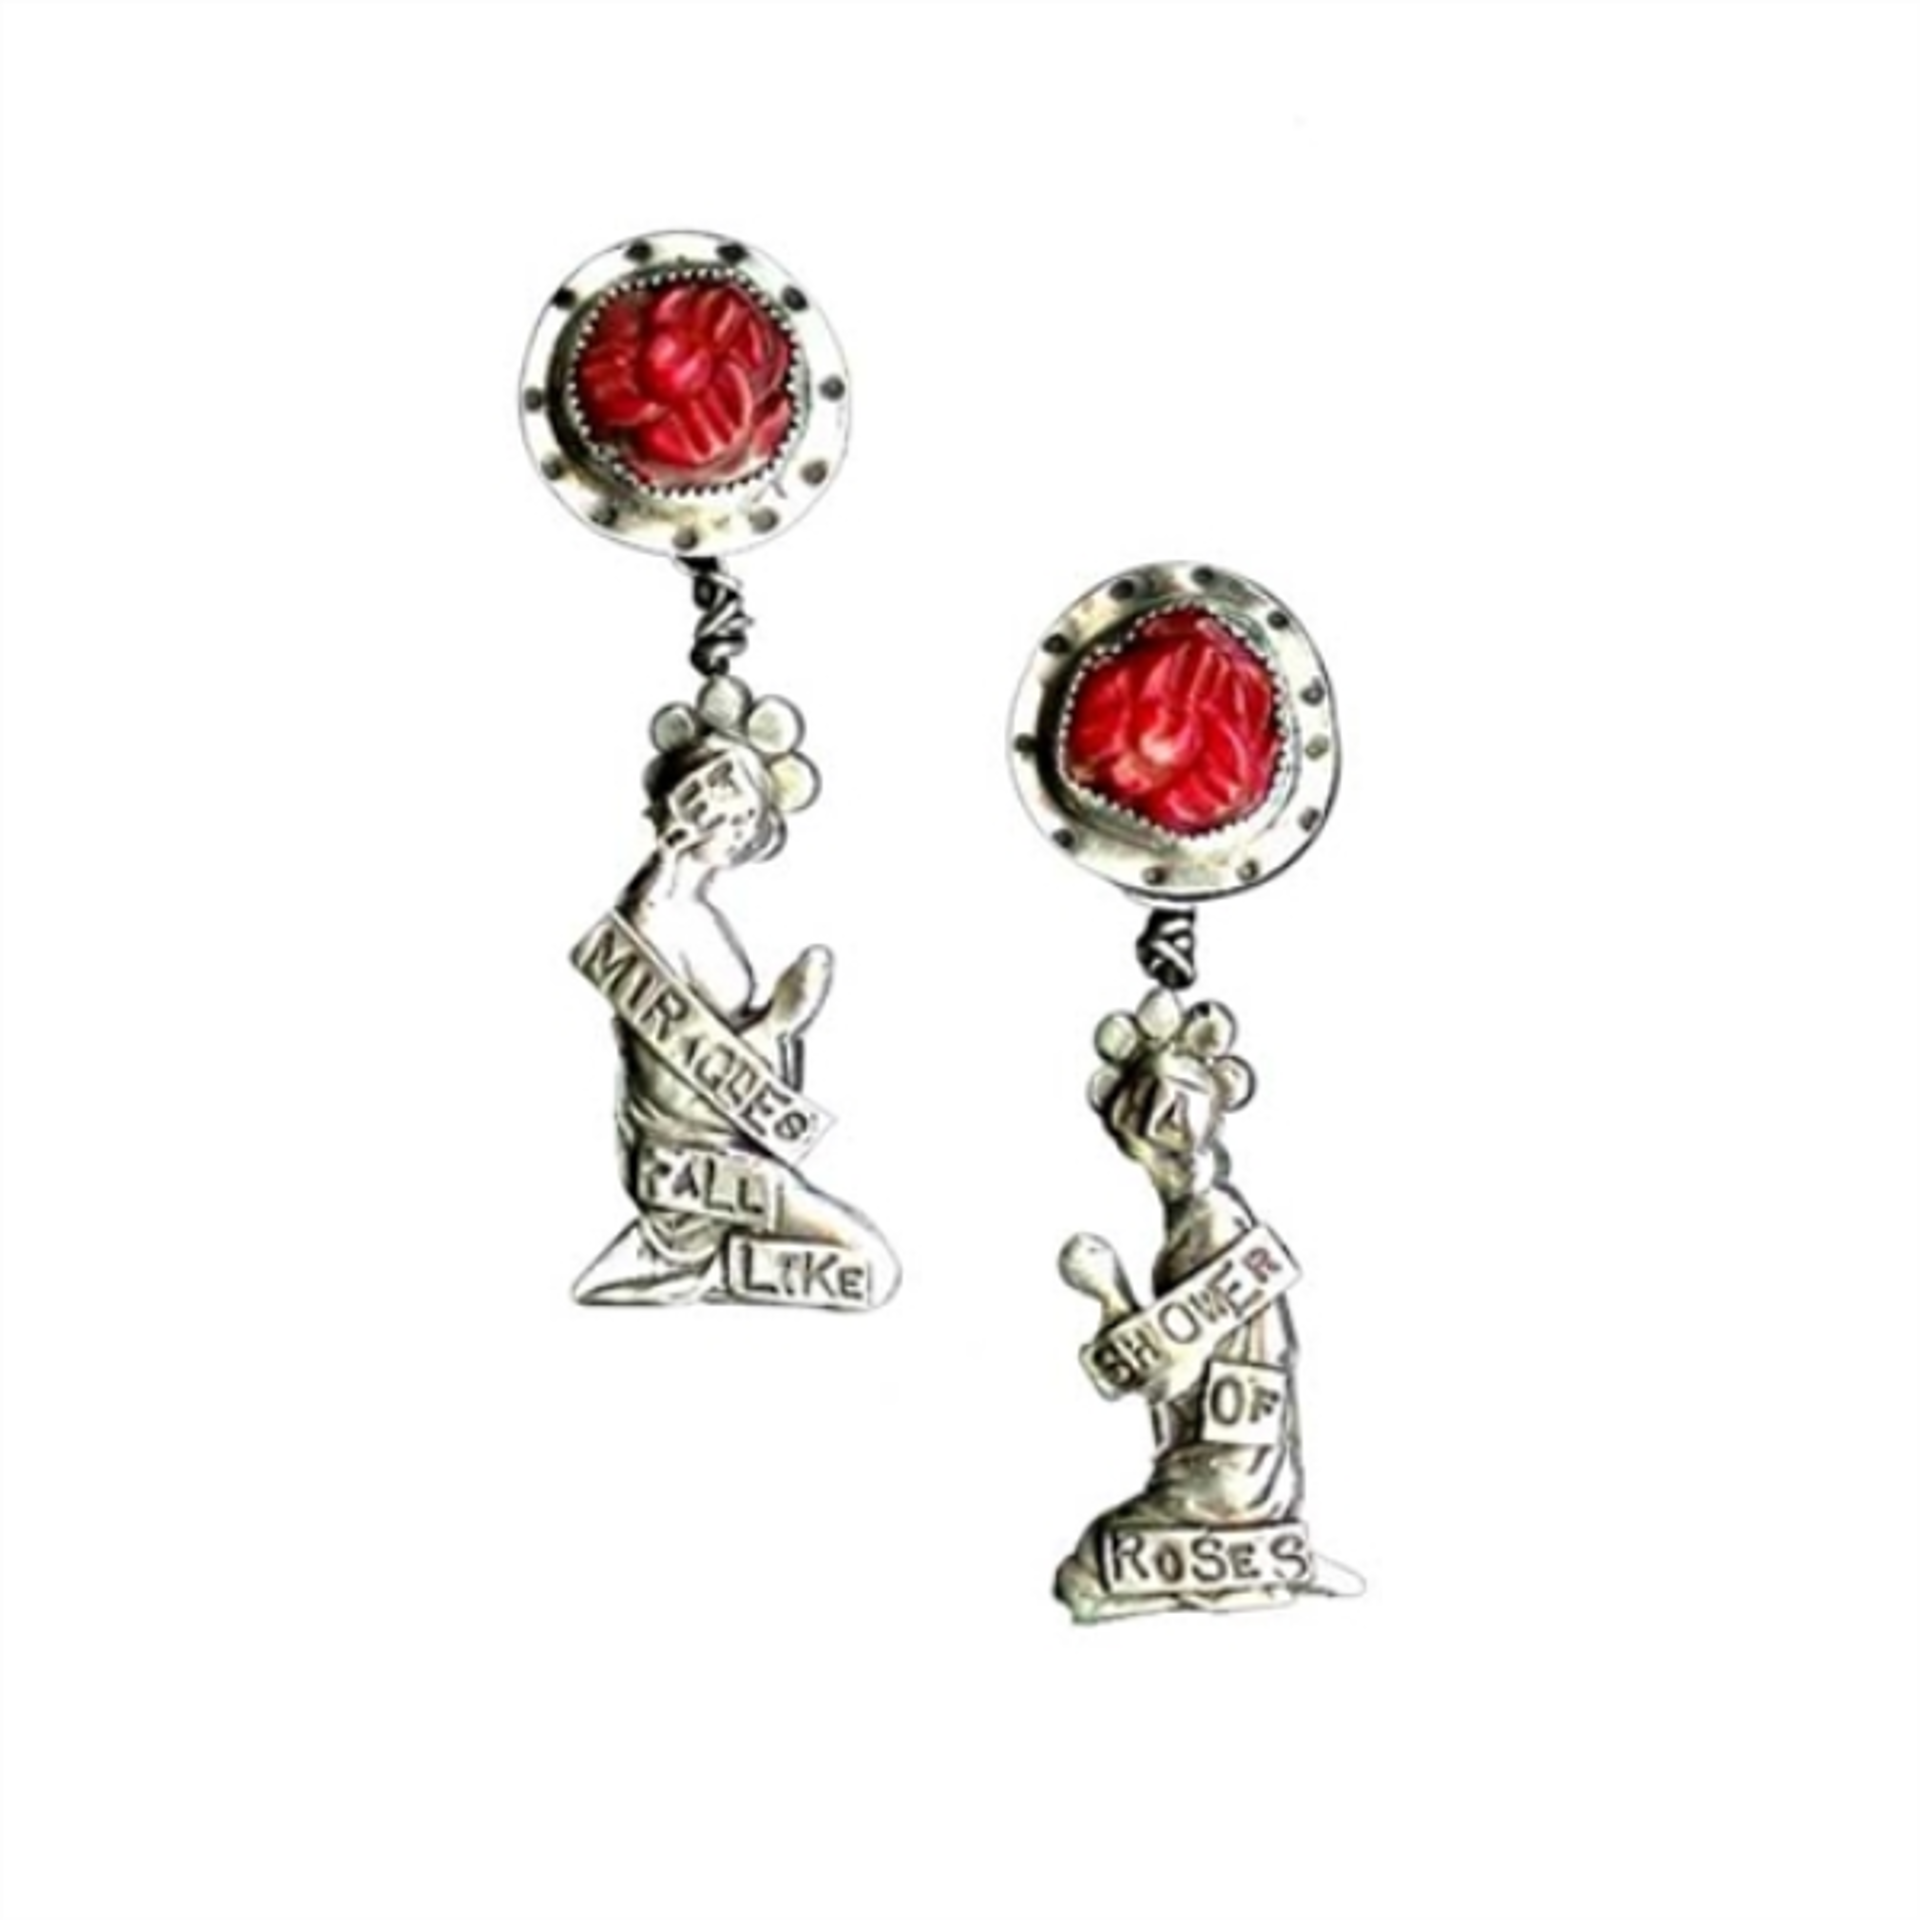 Sweetbird Studio Earrings - Miracle Roses  by Indigo Desert Ranch - Jewelry